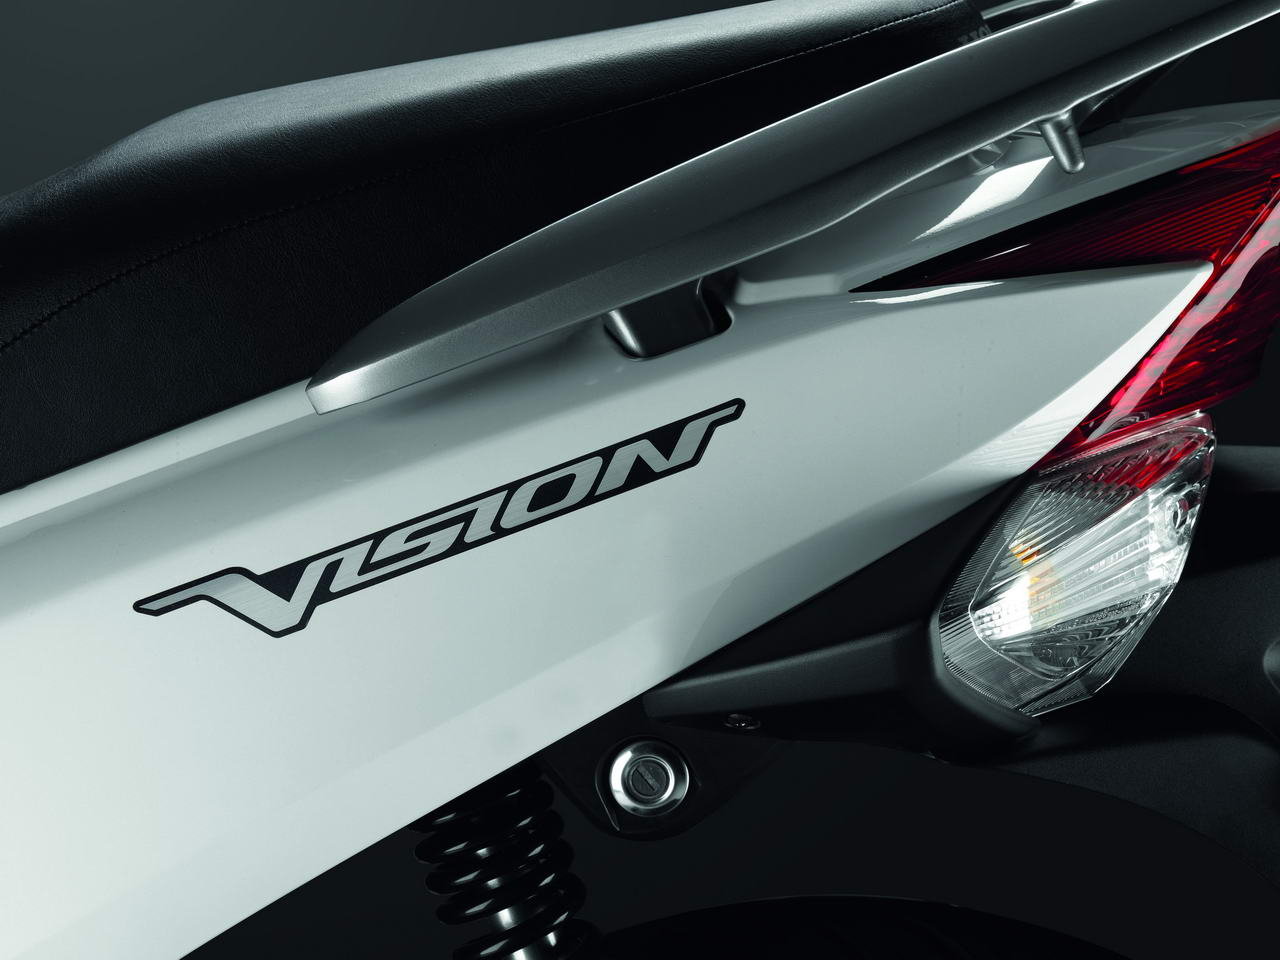 Listino Honda CB 500F Naked Media - image 14744_honda-visionbase on https://moto.motori.net